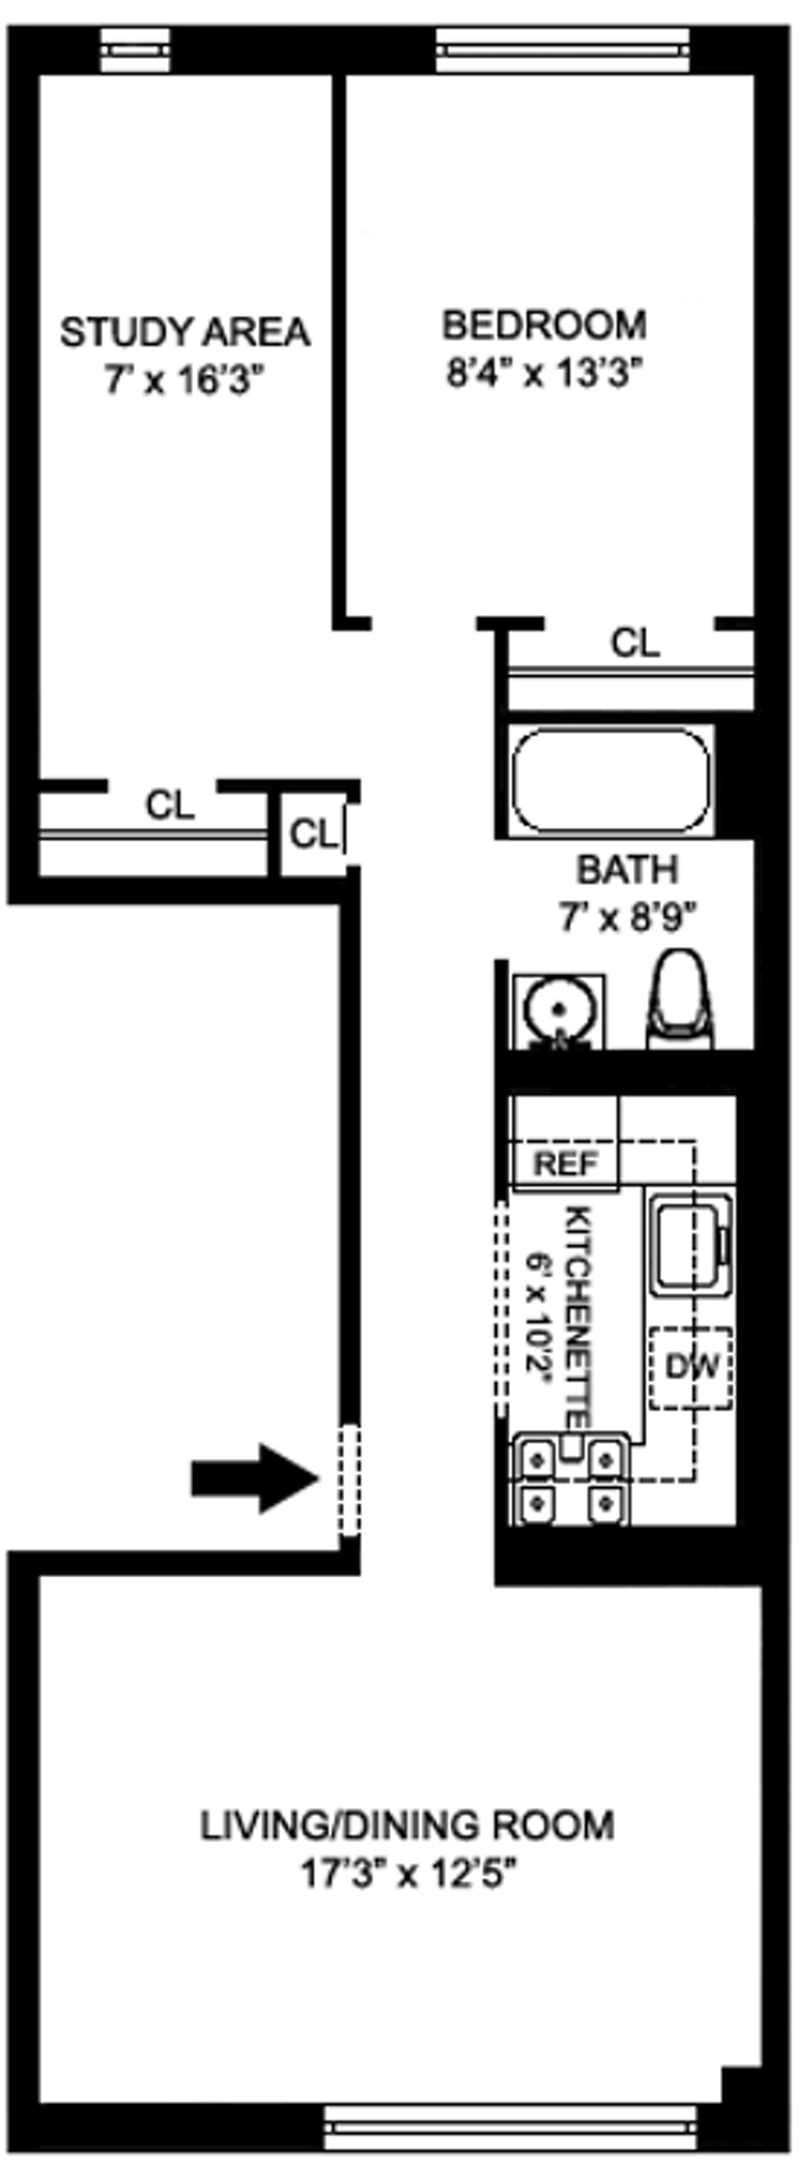 Floorplan for 115 West, 126th Street